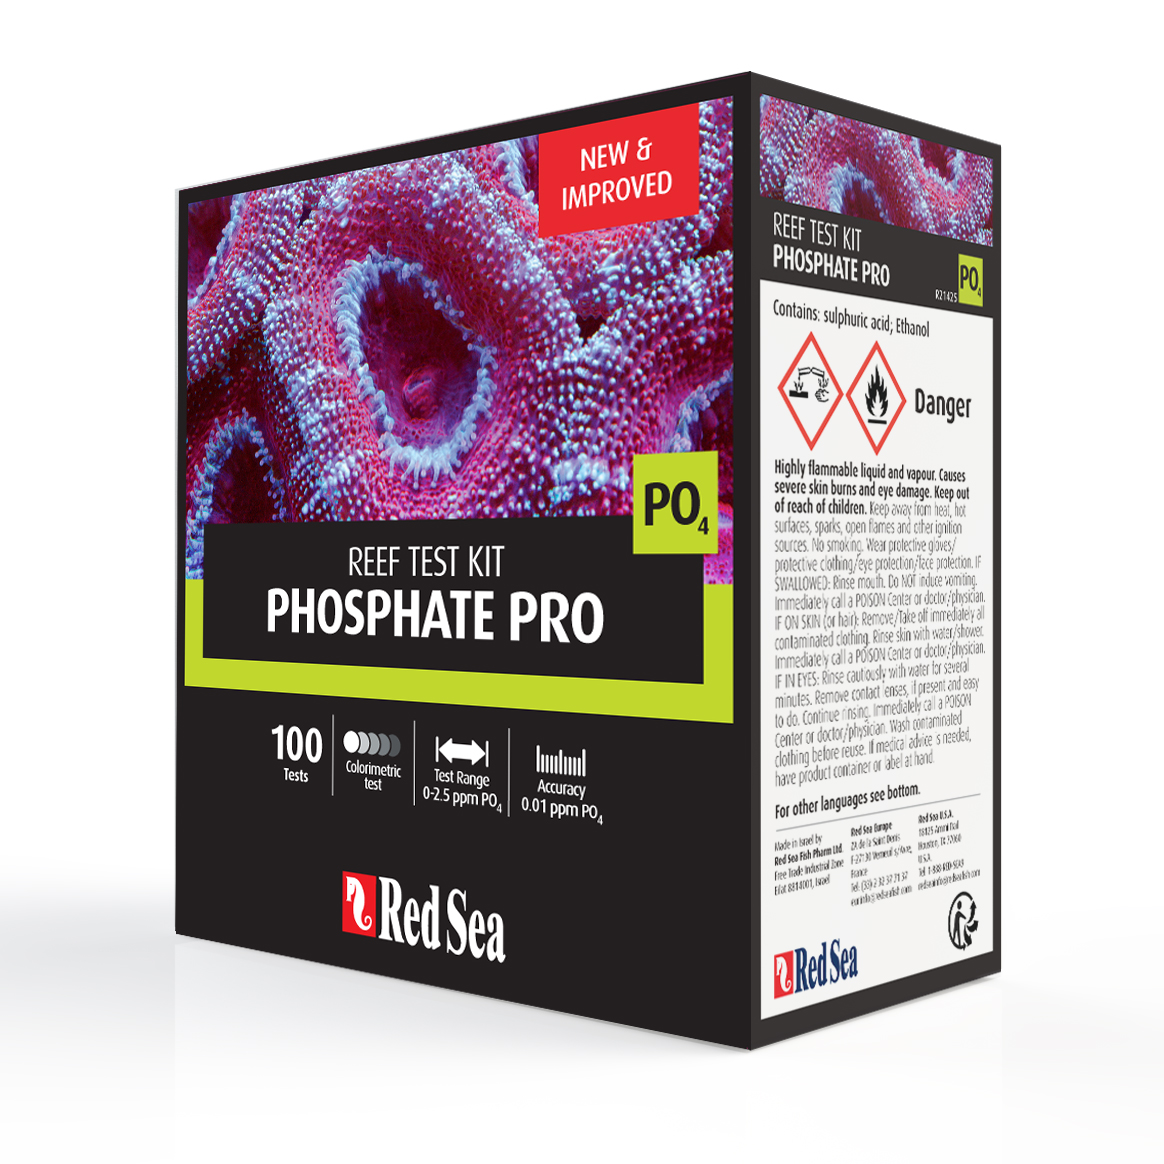 Red Sea Phosphate Pro Reef Test Kit